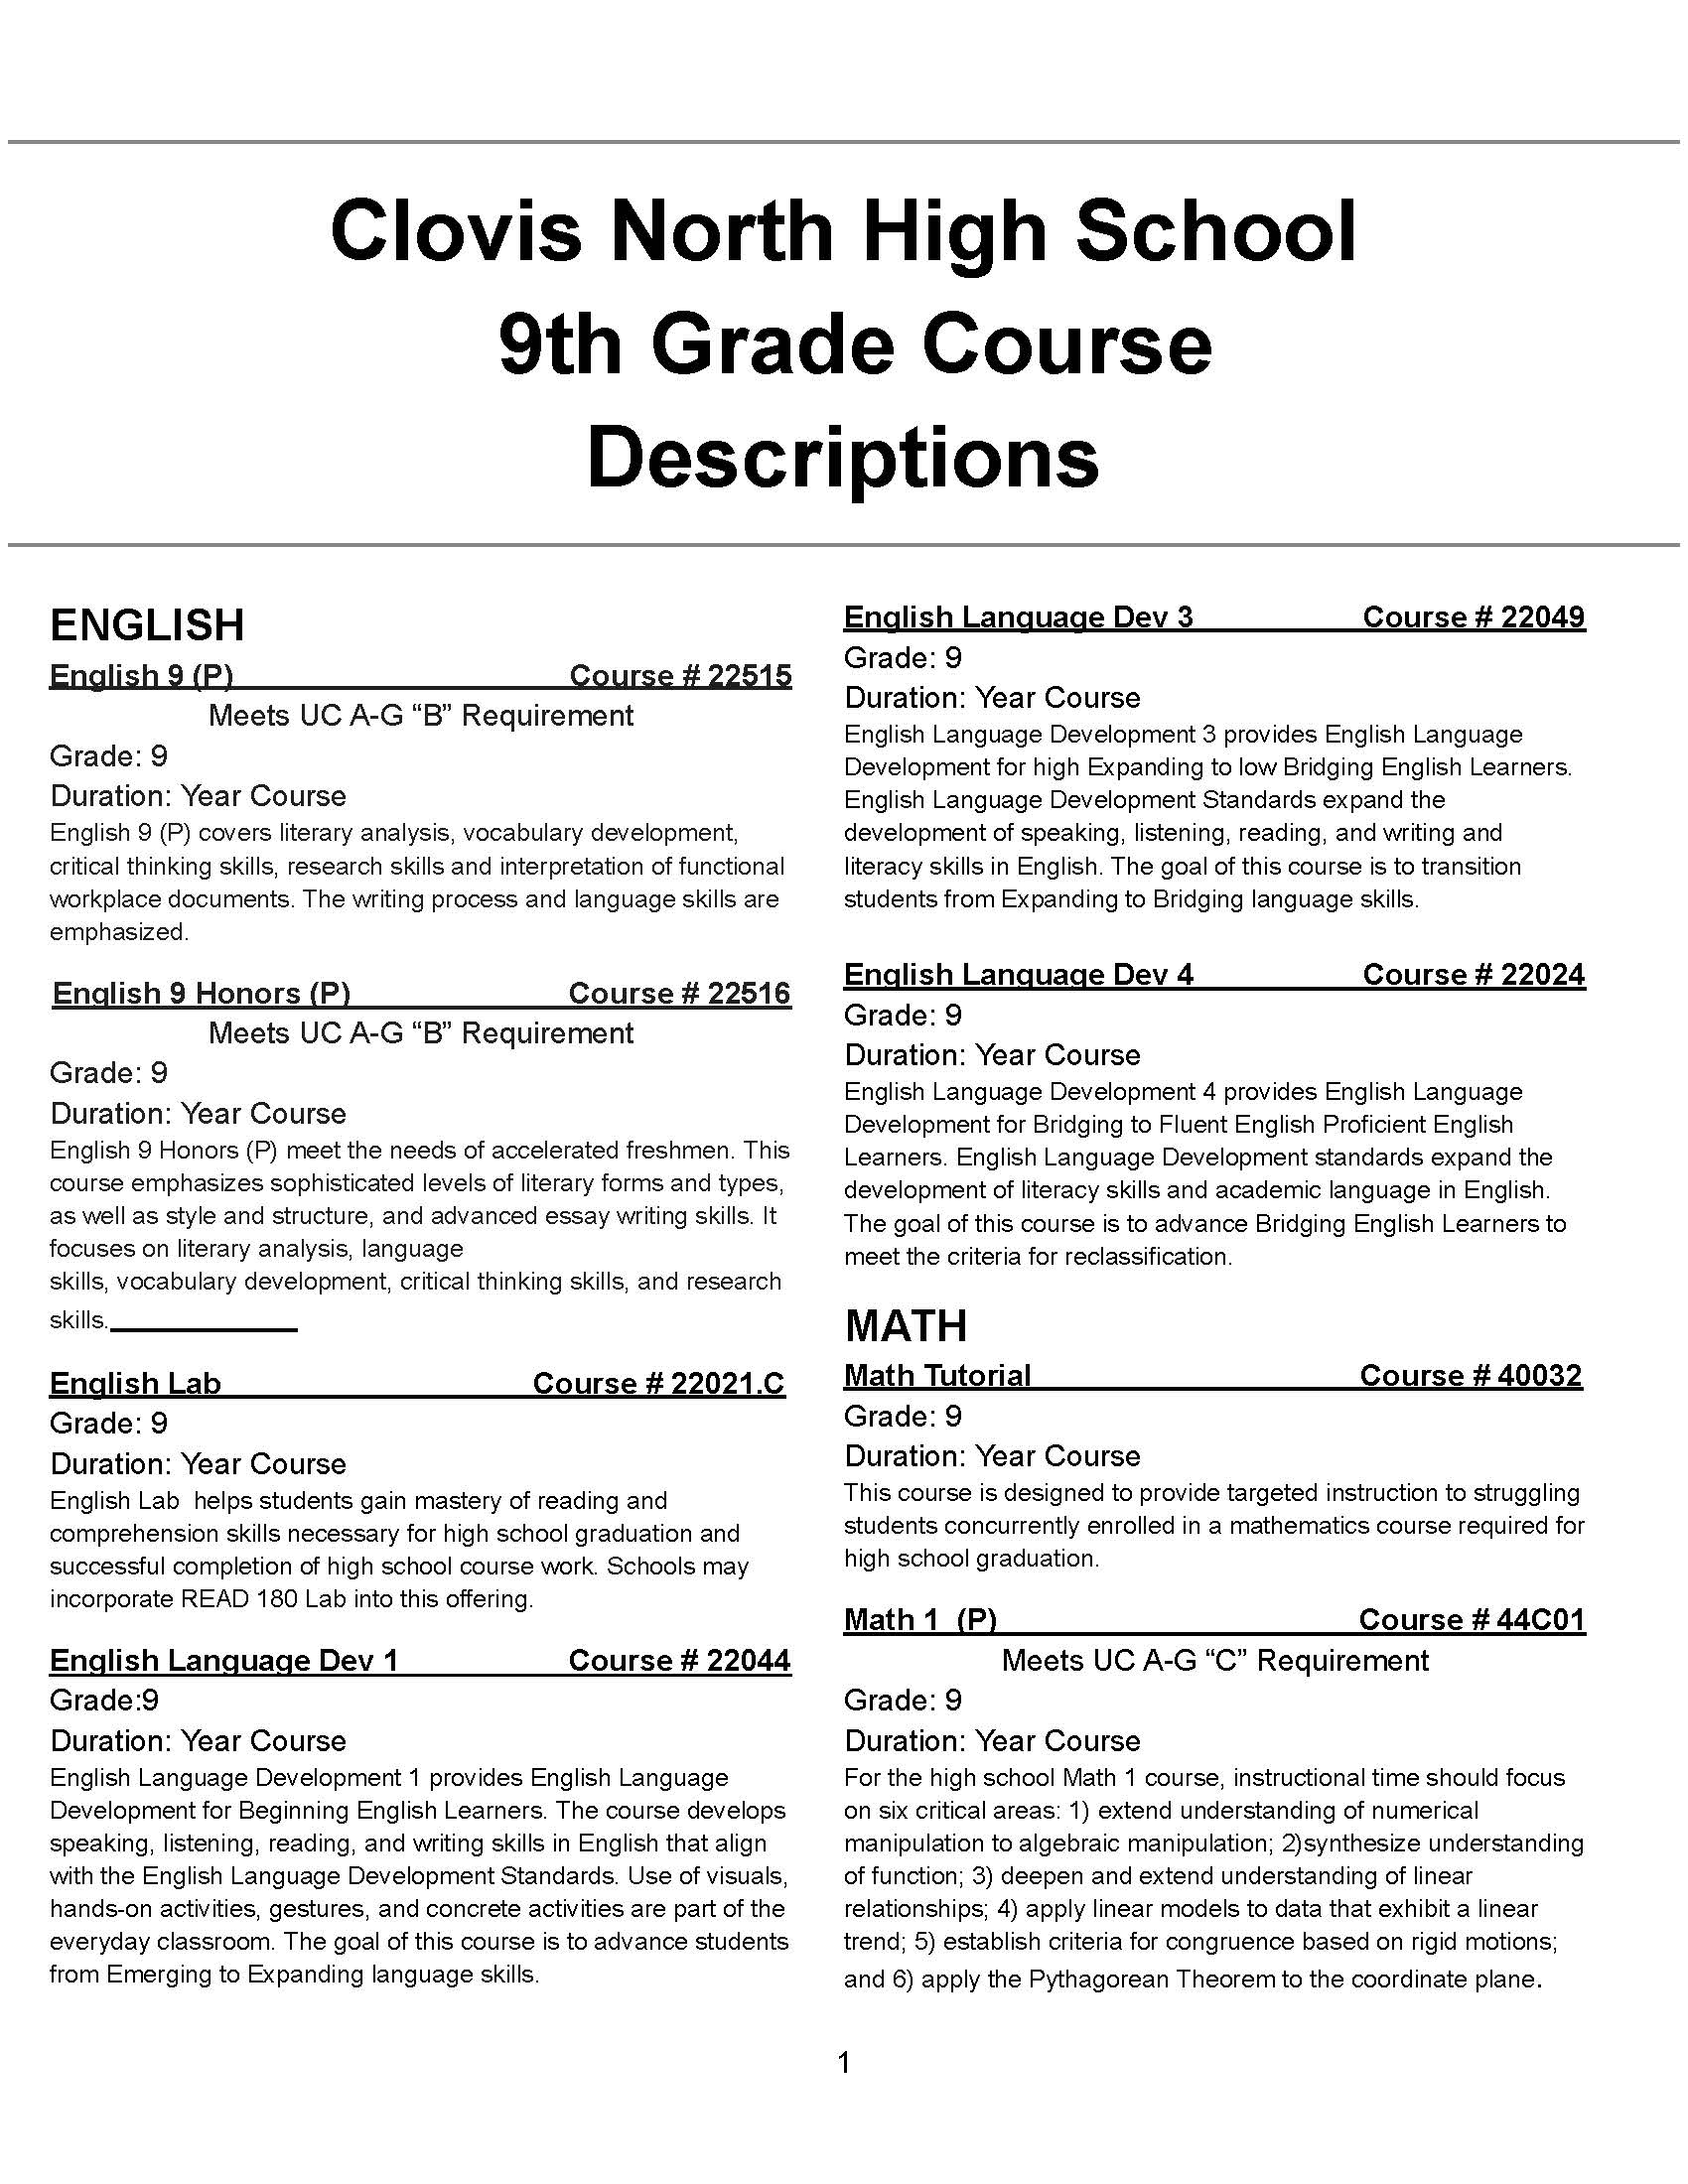 9th grade course description